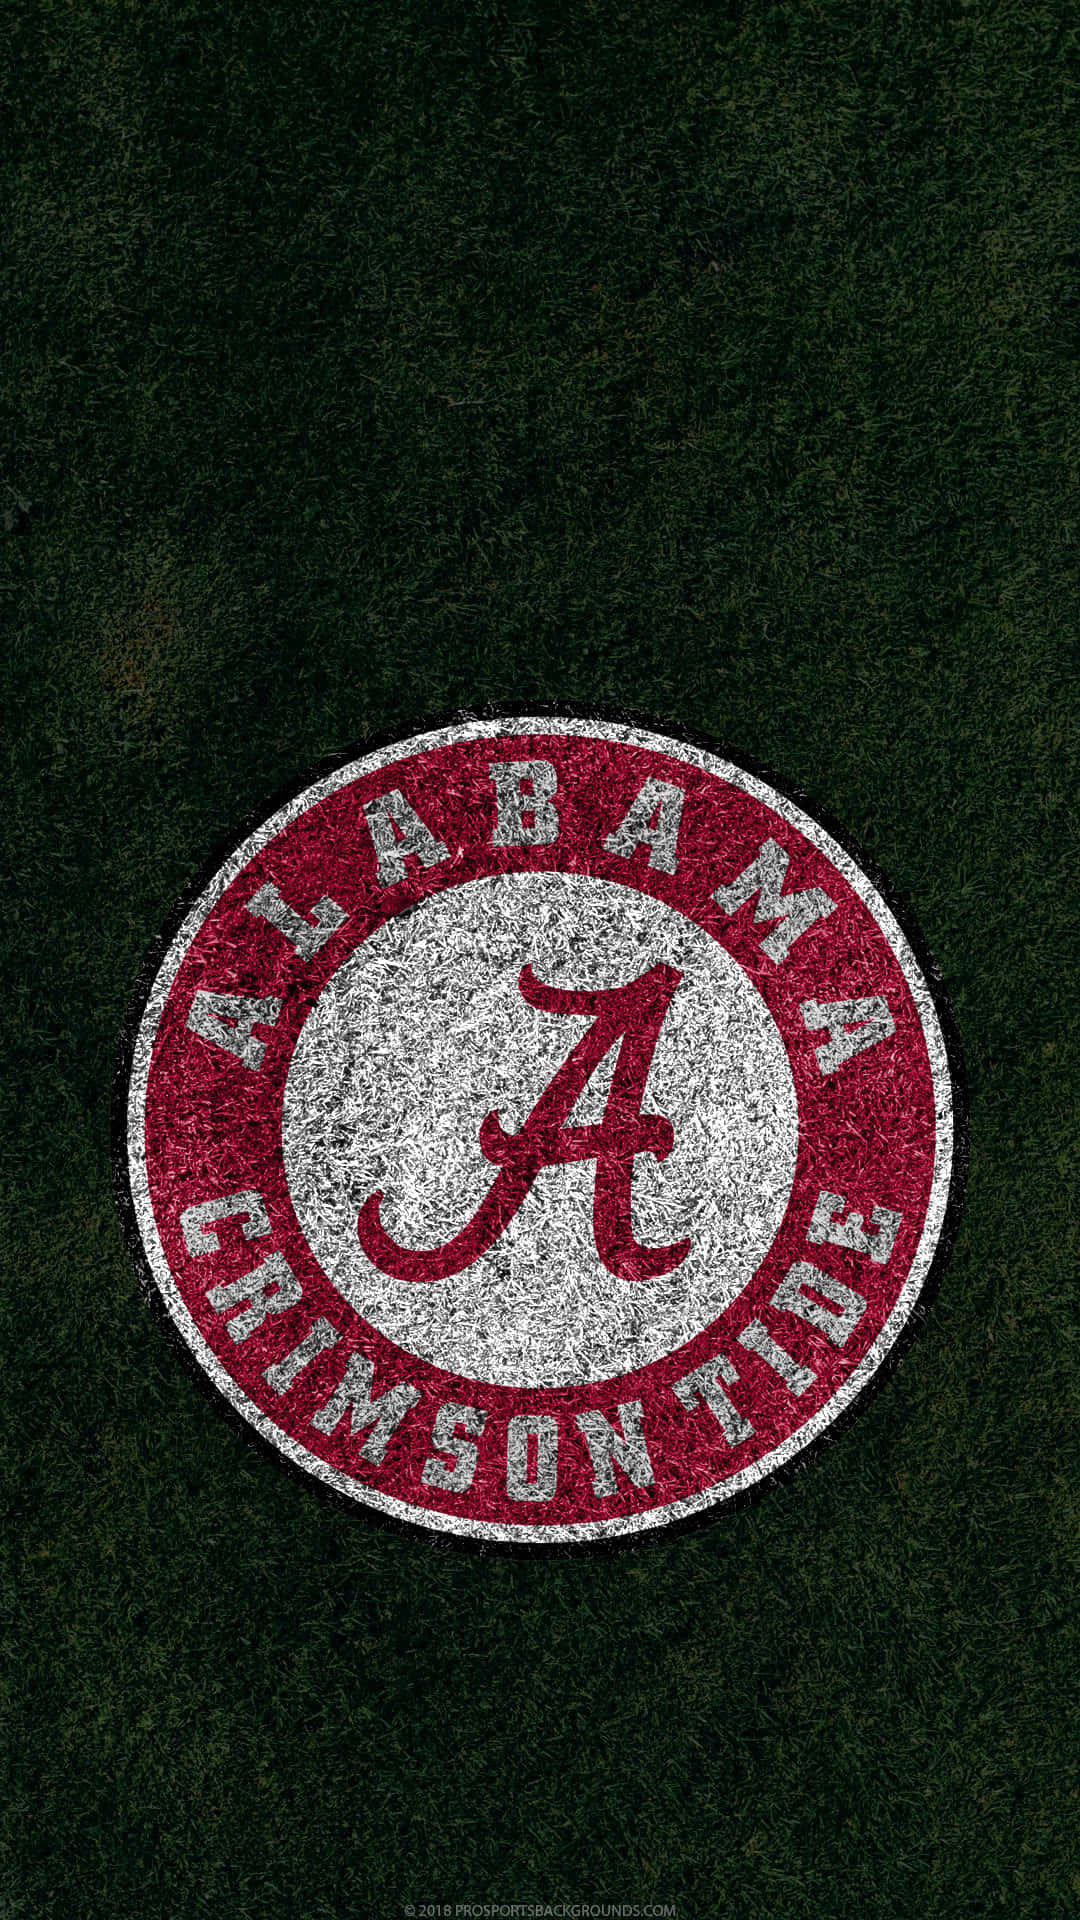 The University of Alabama Official Football Logo Wallpaper